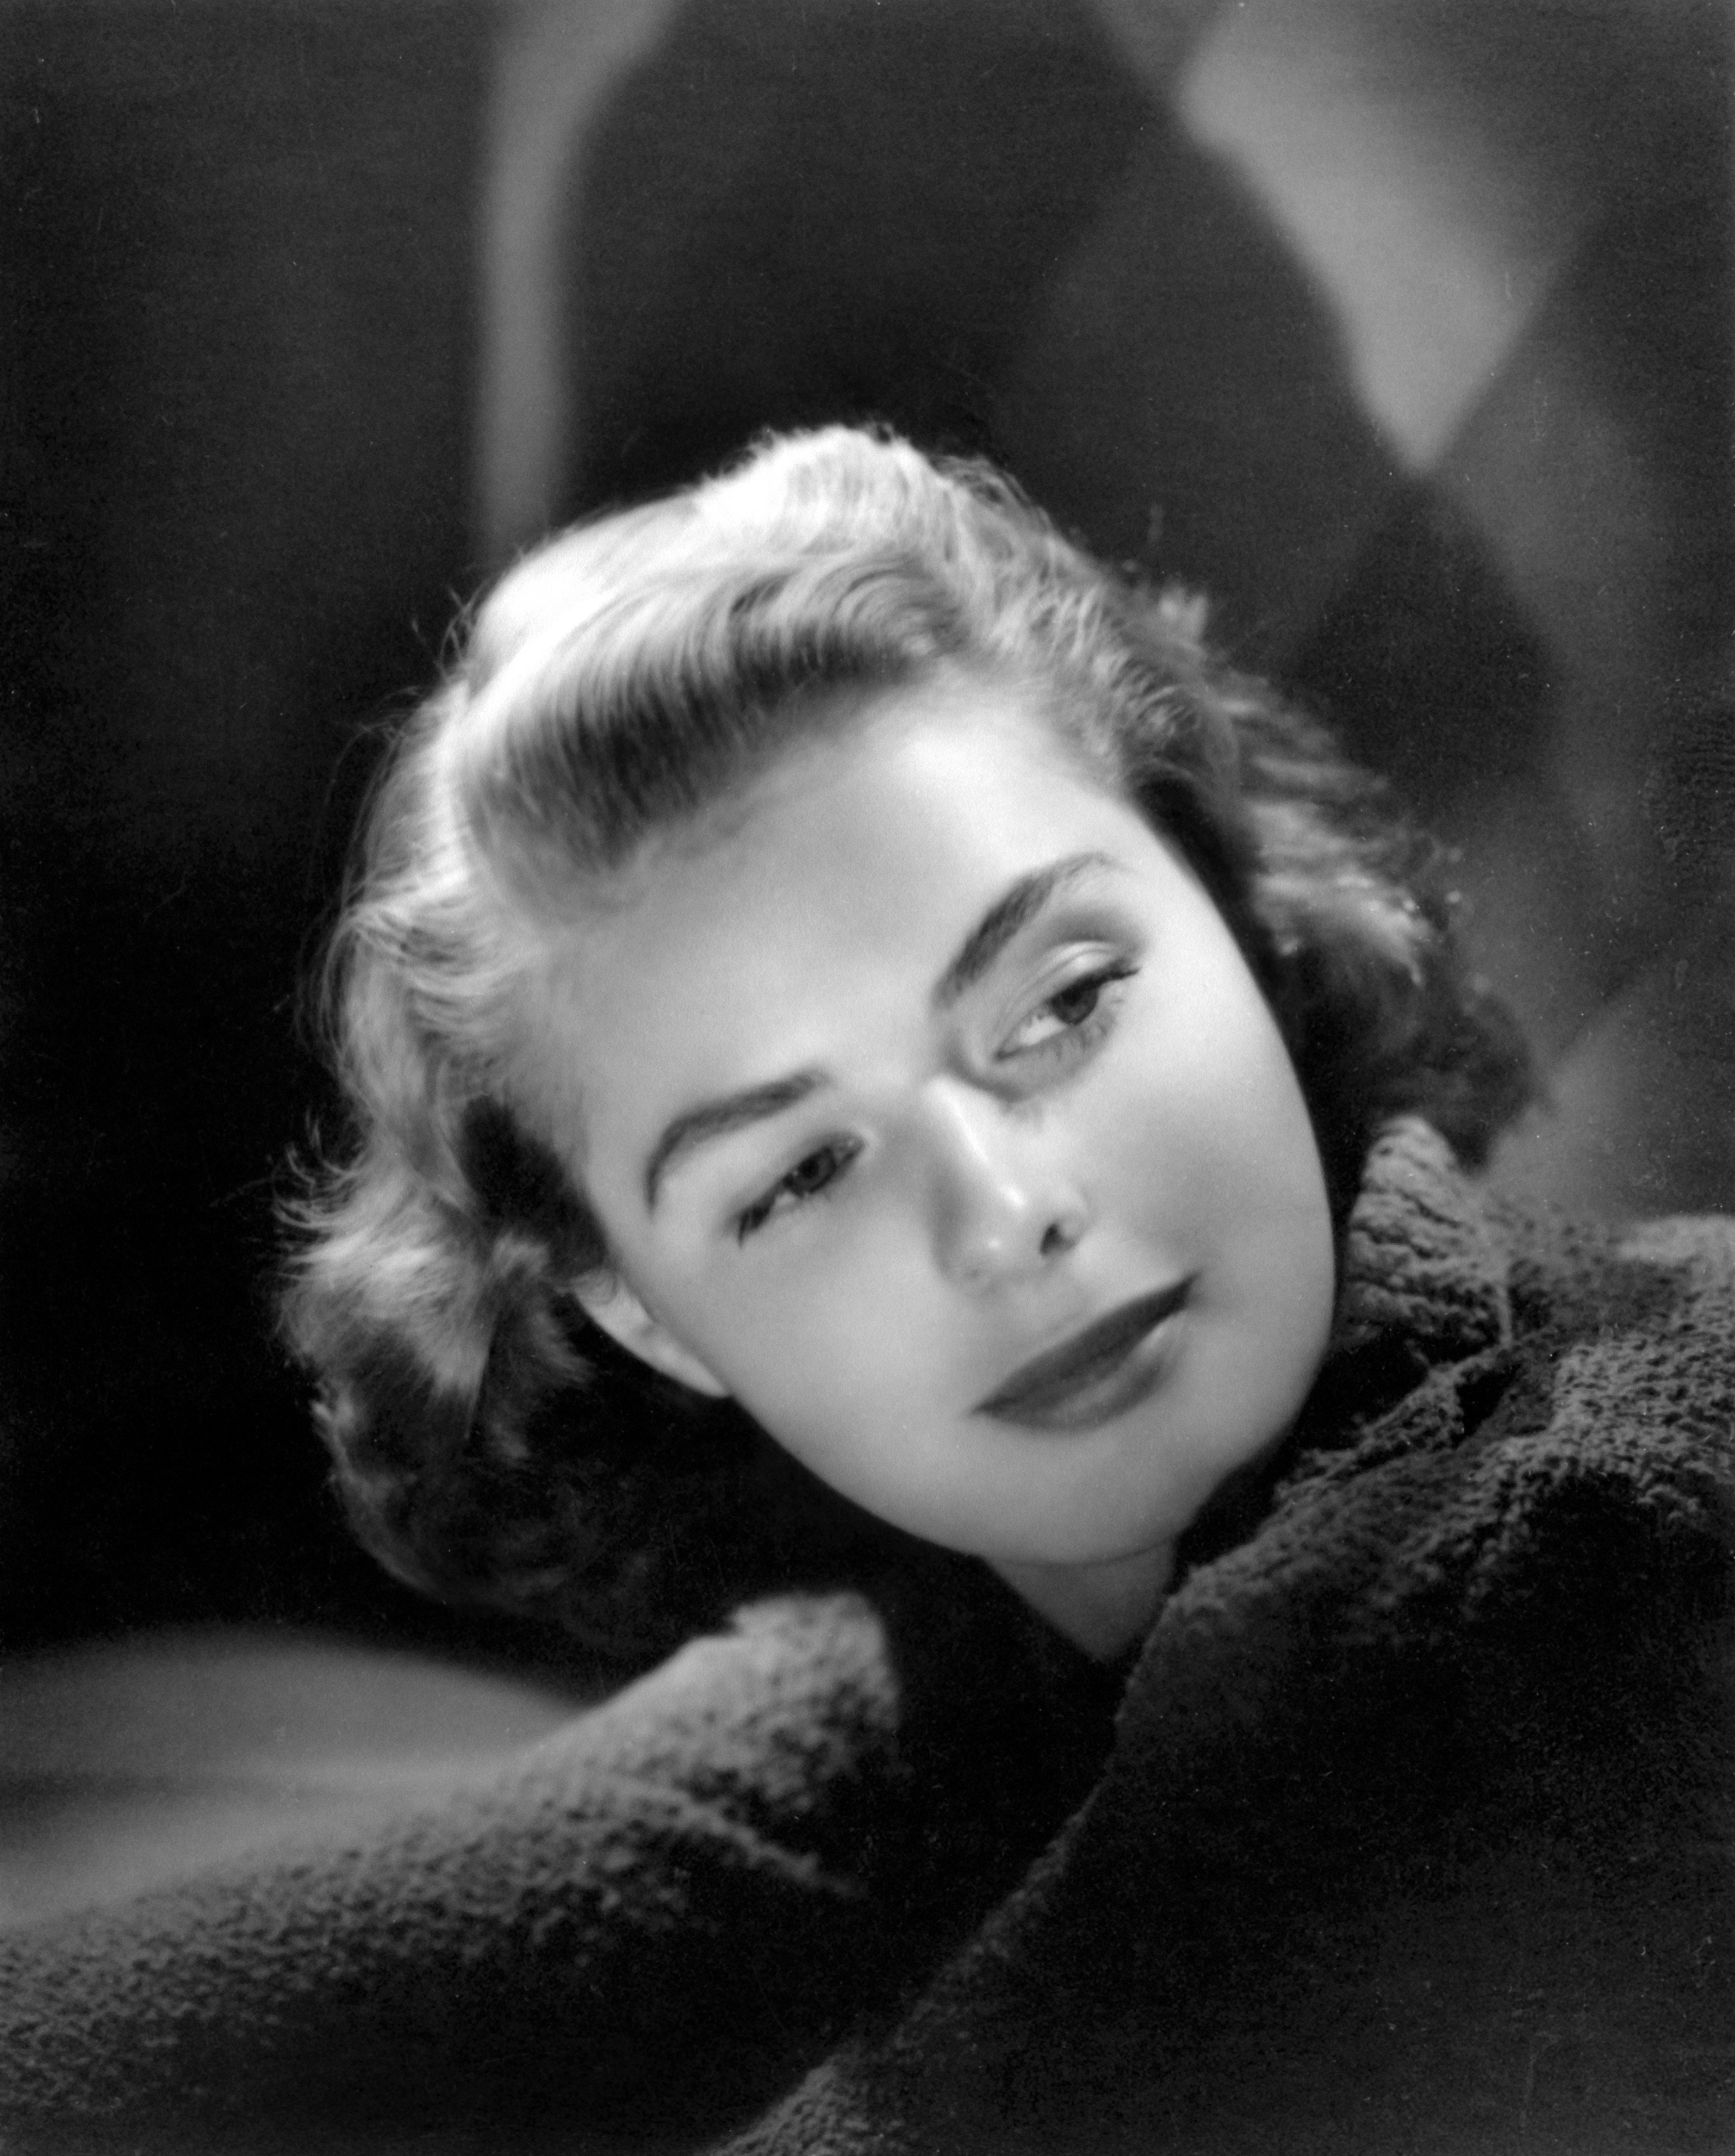 Ingrid Bergman, Swedish actress and film star, 1940 | Photo: GettyImages